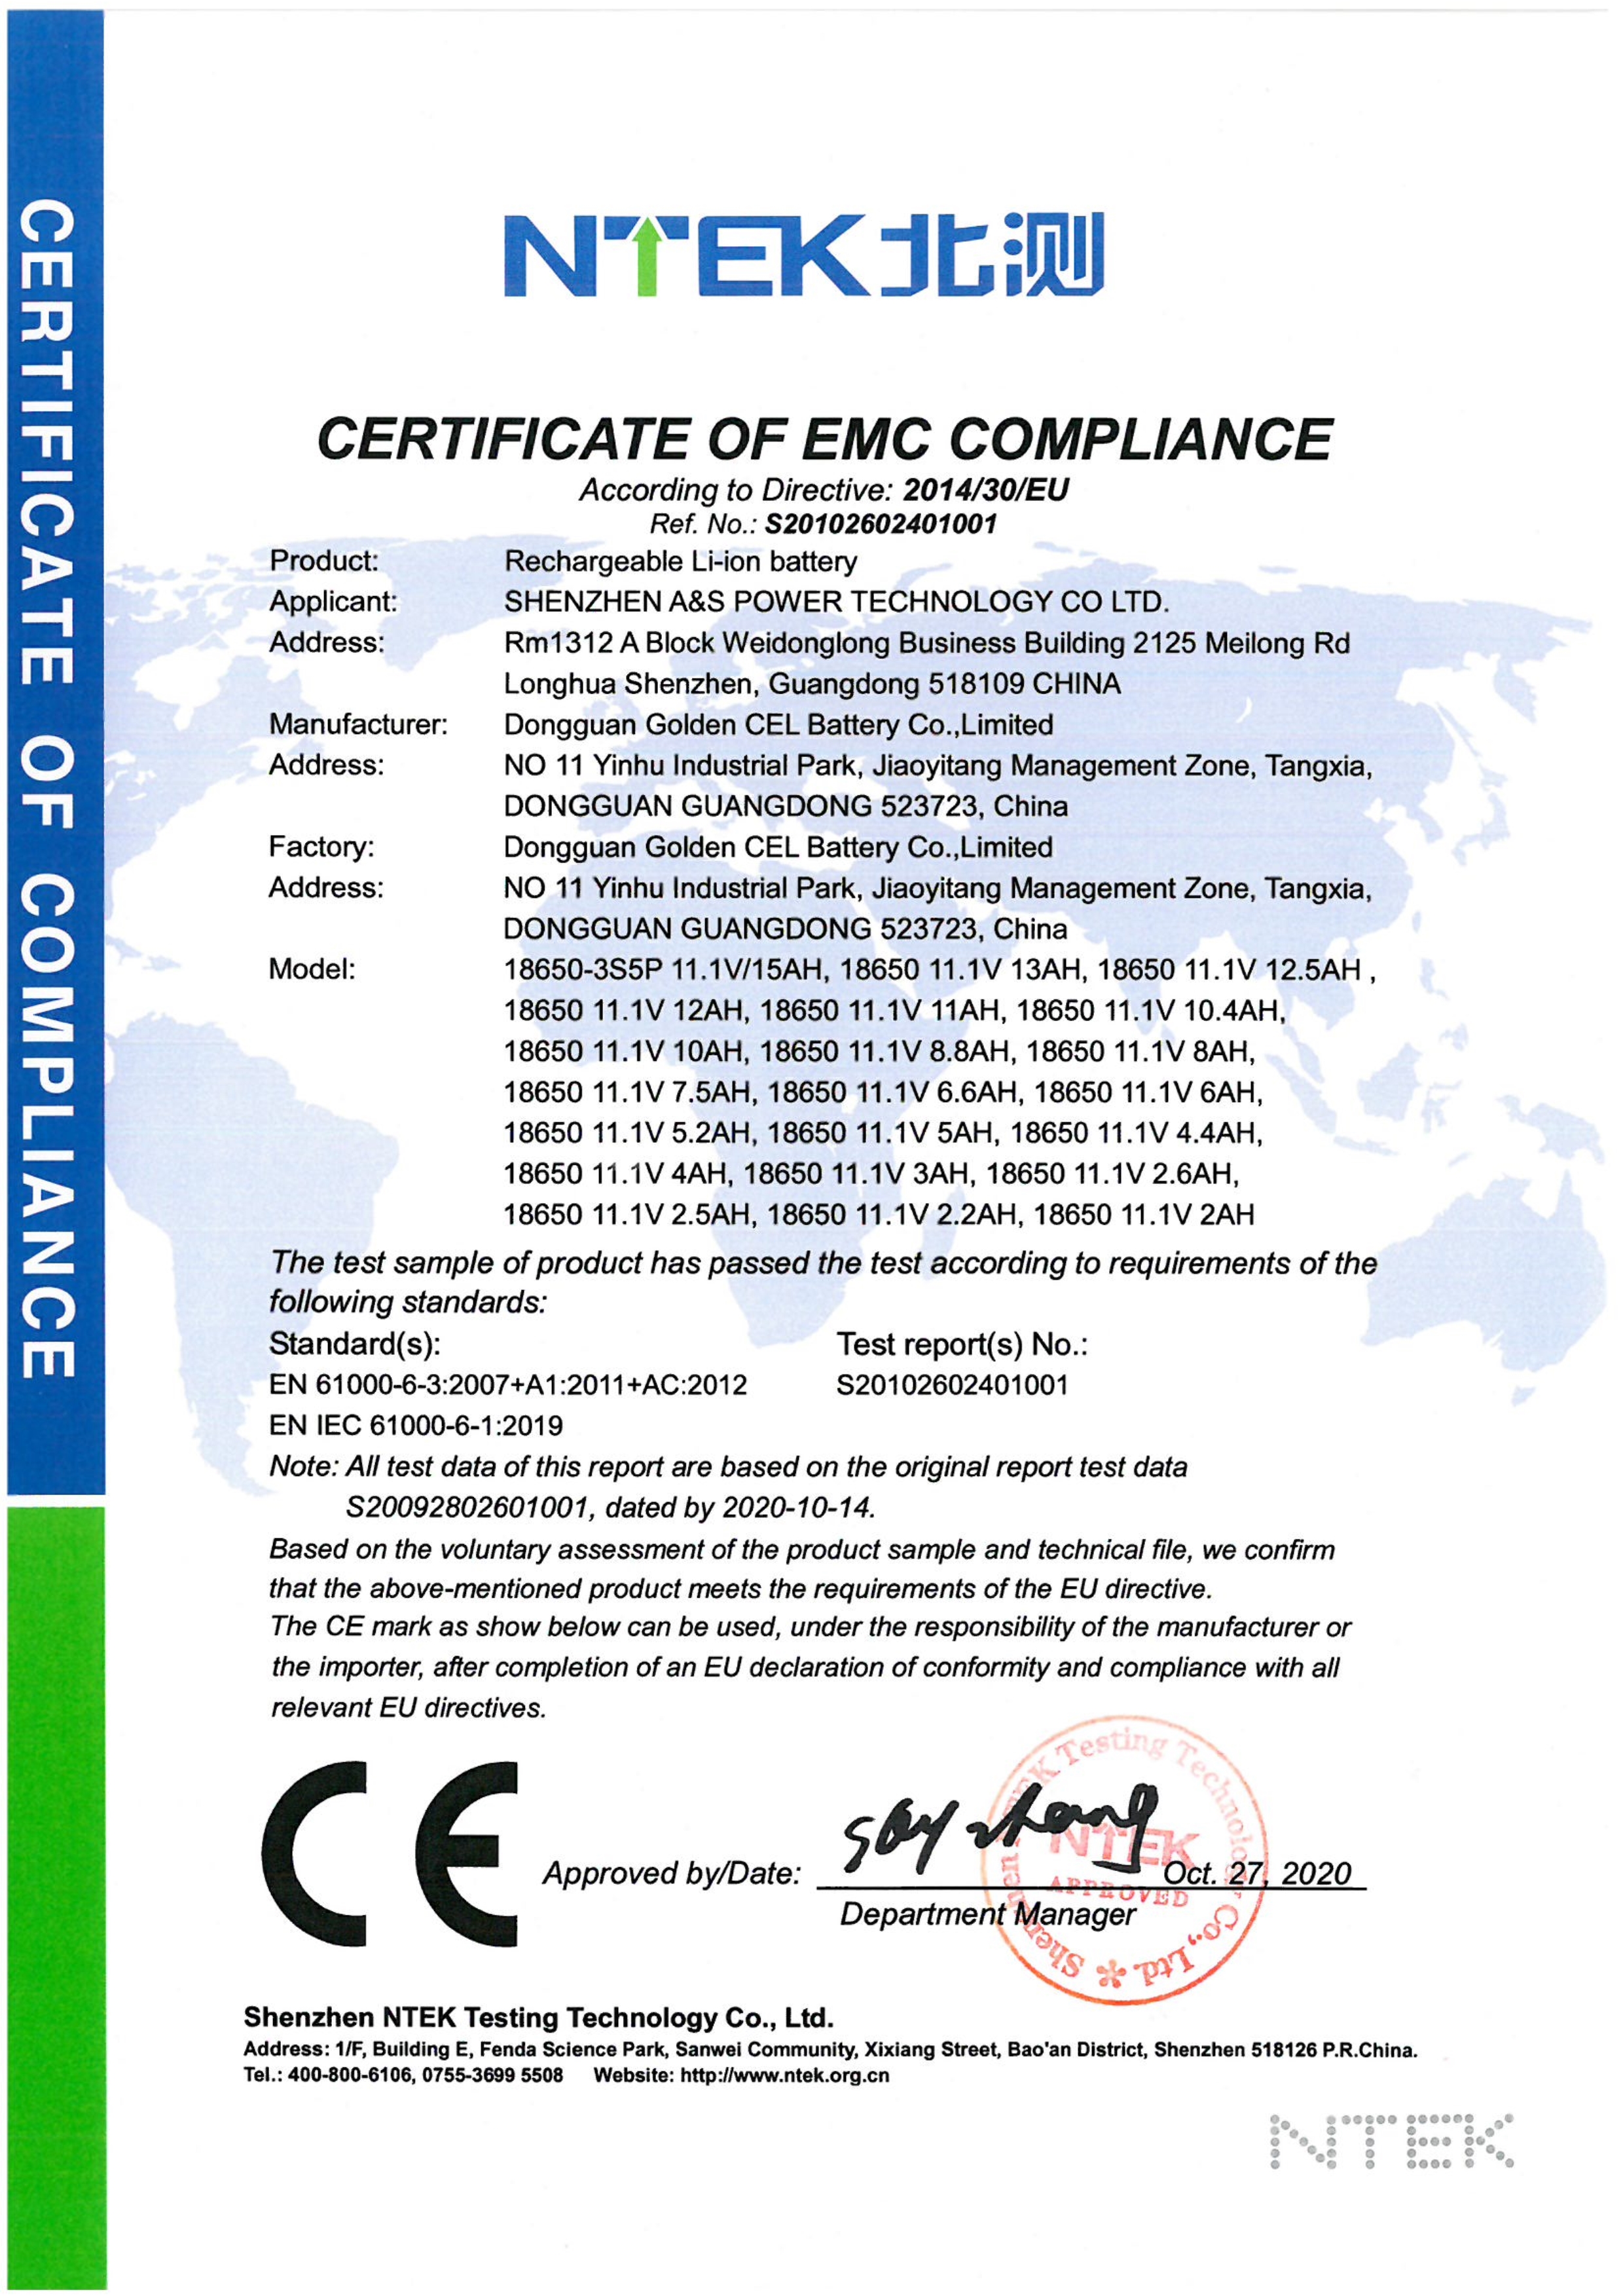 A&S Power 18650-3S5P-11.1V CE Certificate